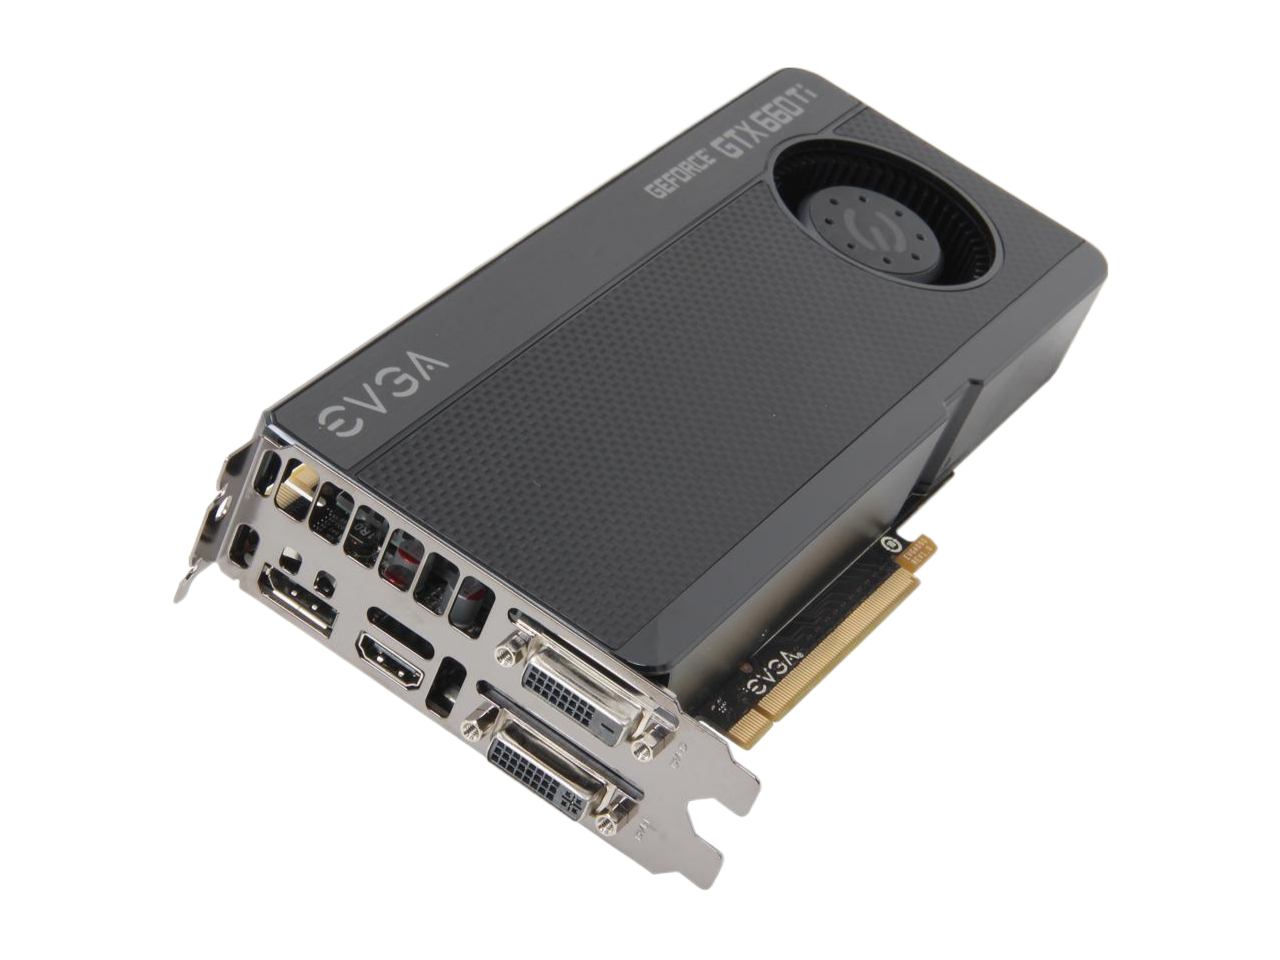 EVGA SuperClocked G-SYNC Support GeForce GTX 660 Ti 2GB 192-bit GDDR5 PCI Express 3.0 x16 HDCP Ready SLI Support Video Card 02G-P4-3662-KR